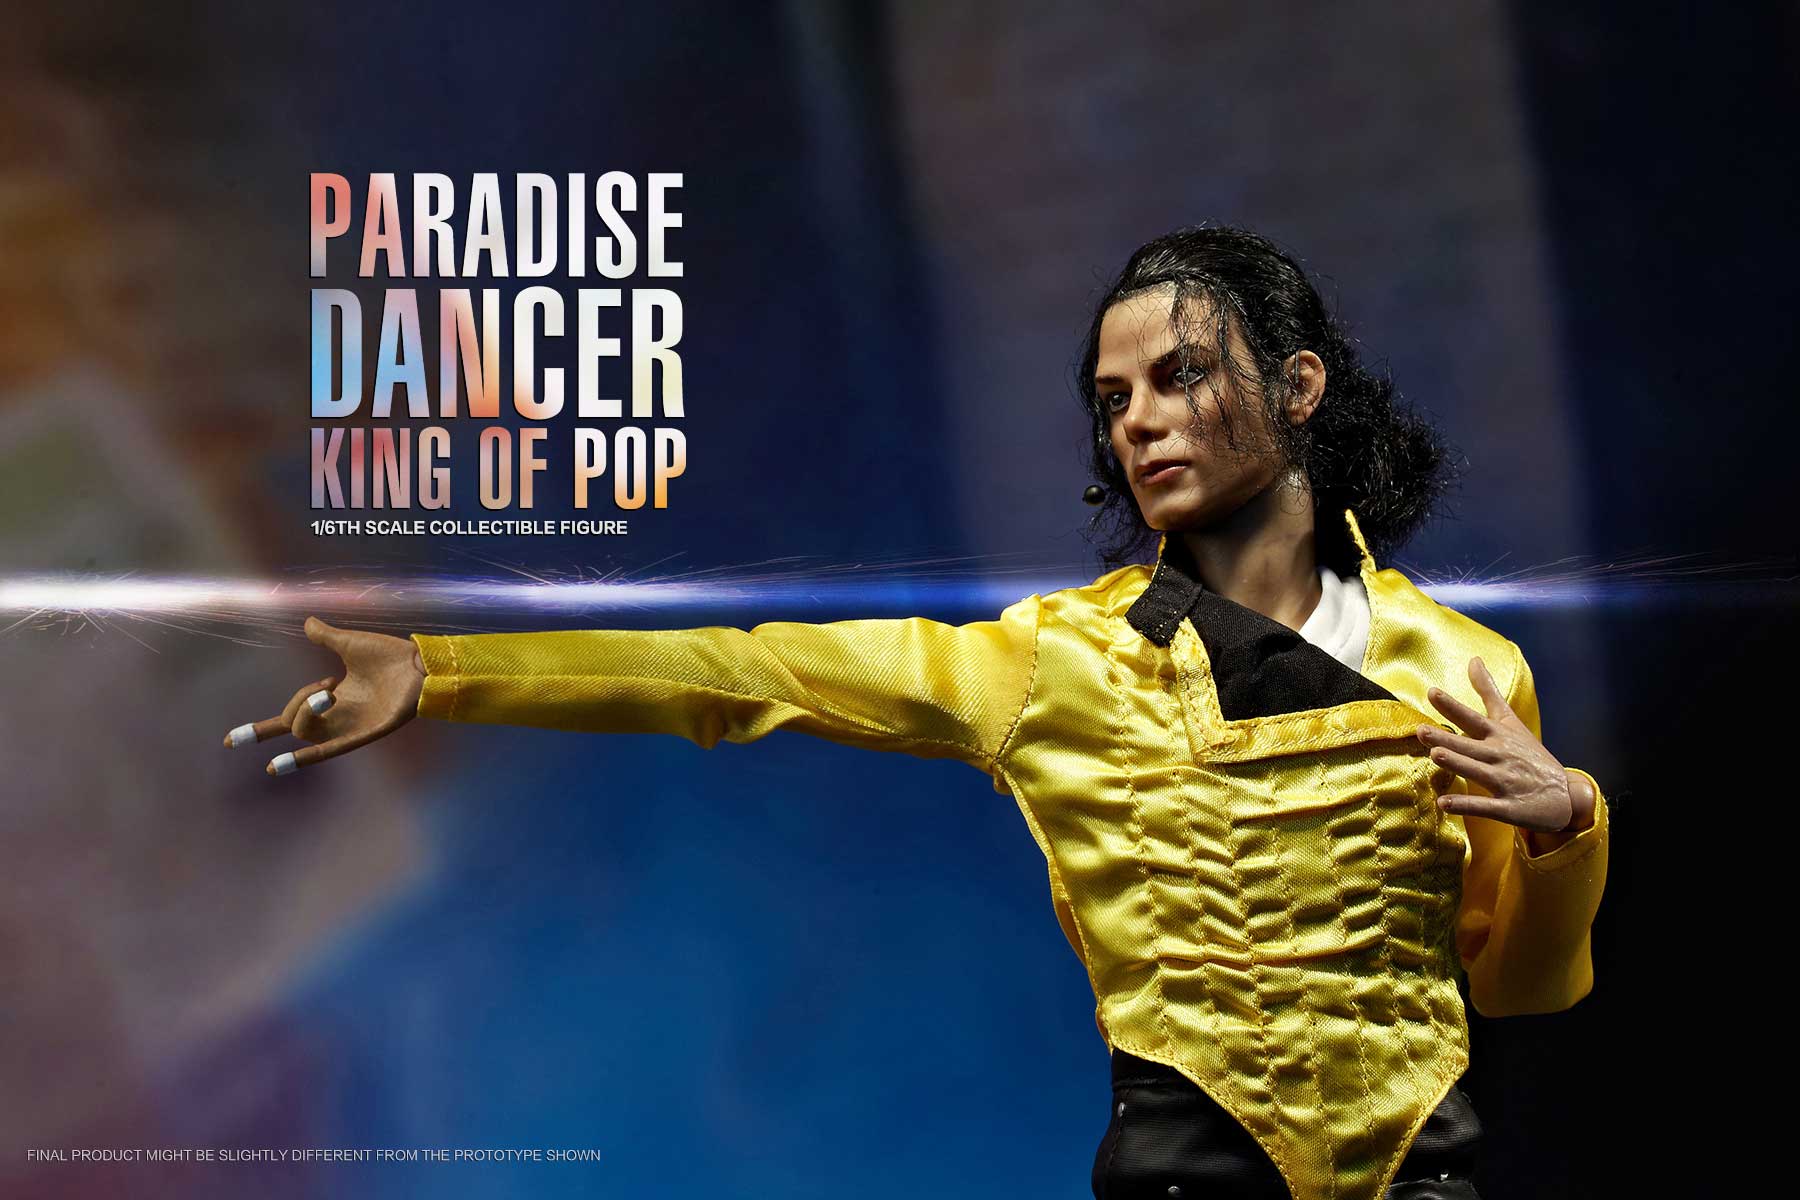 Dance of paradise. Фигурка Майкла Джексона. Танцоры к поп. Танцор короля фф.